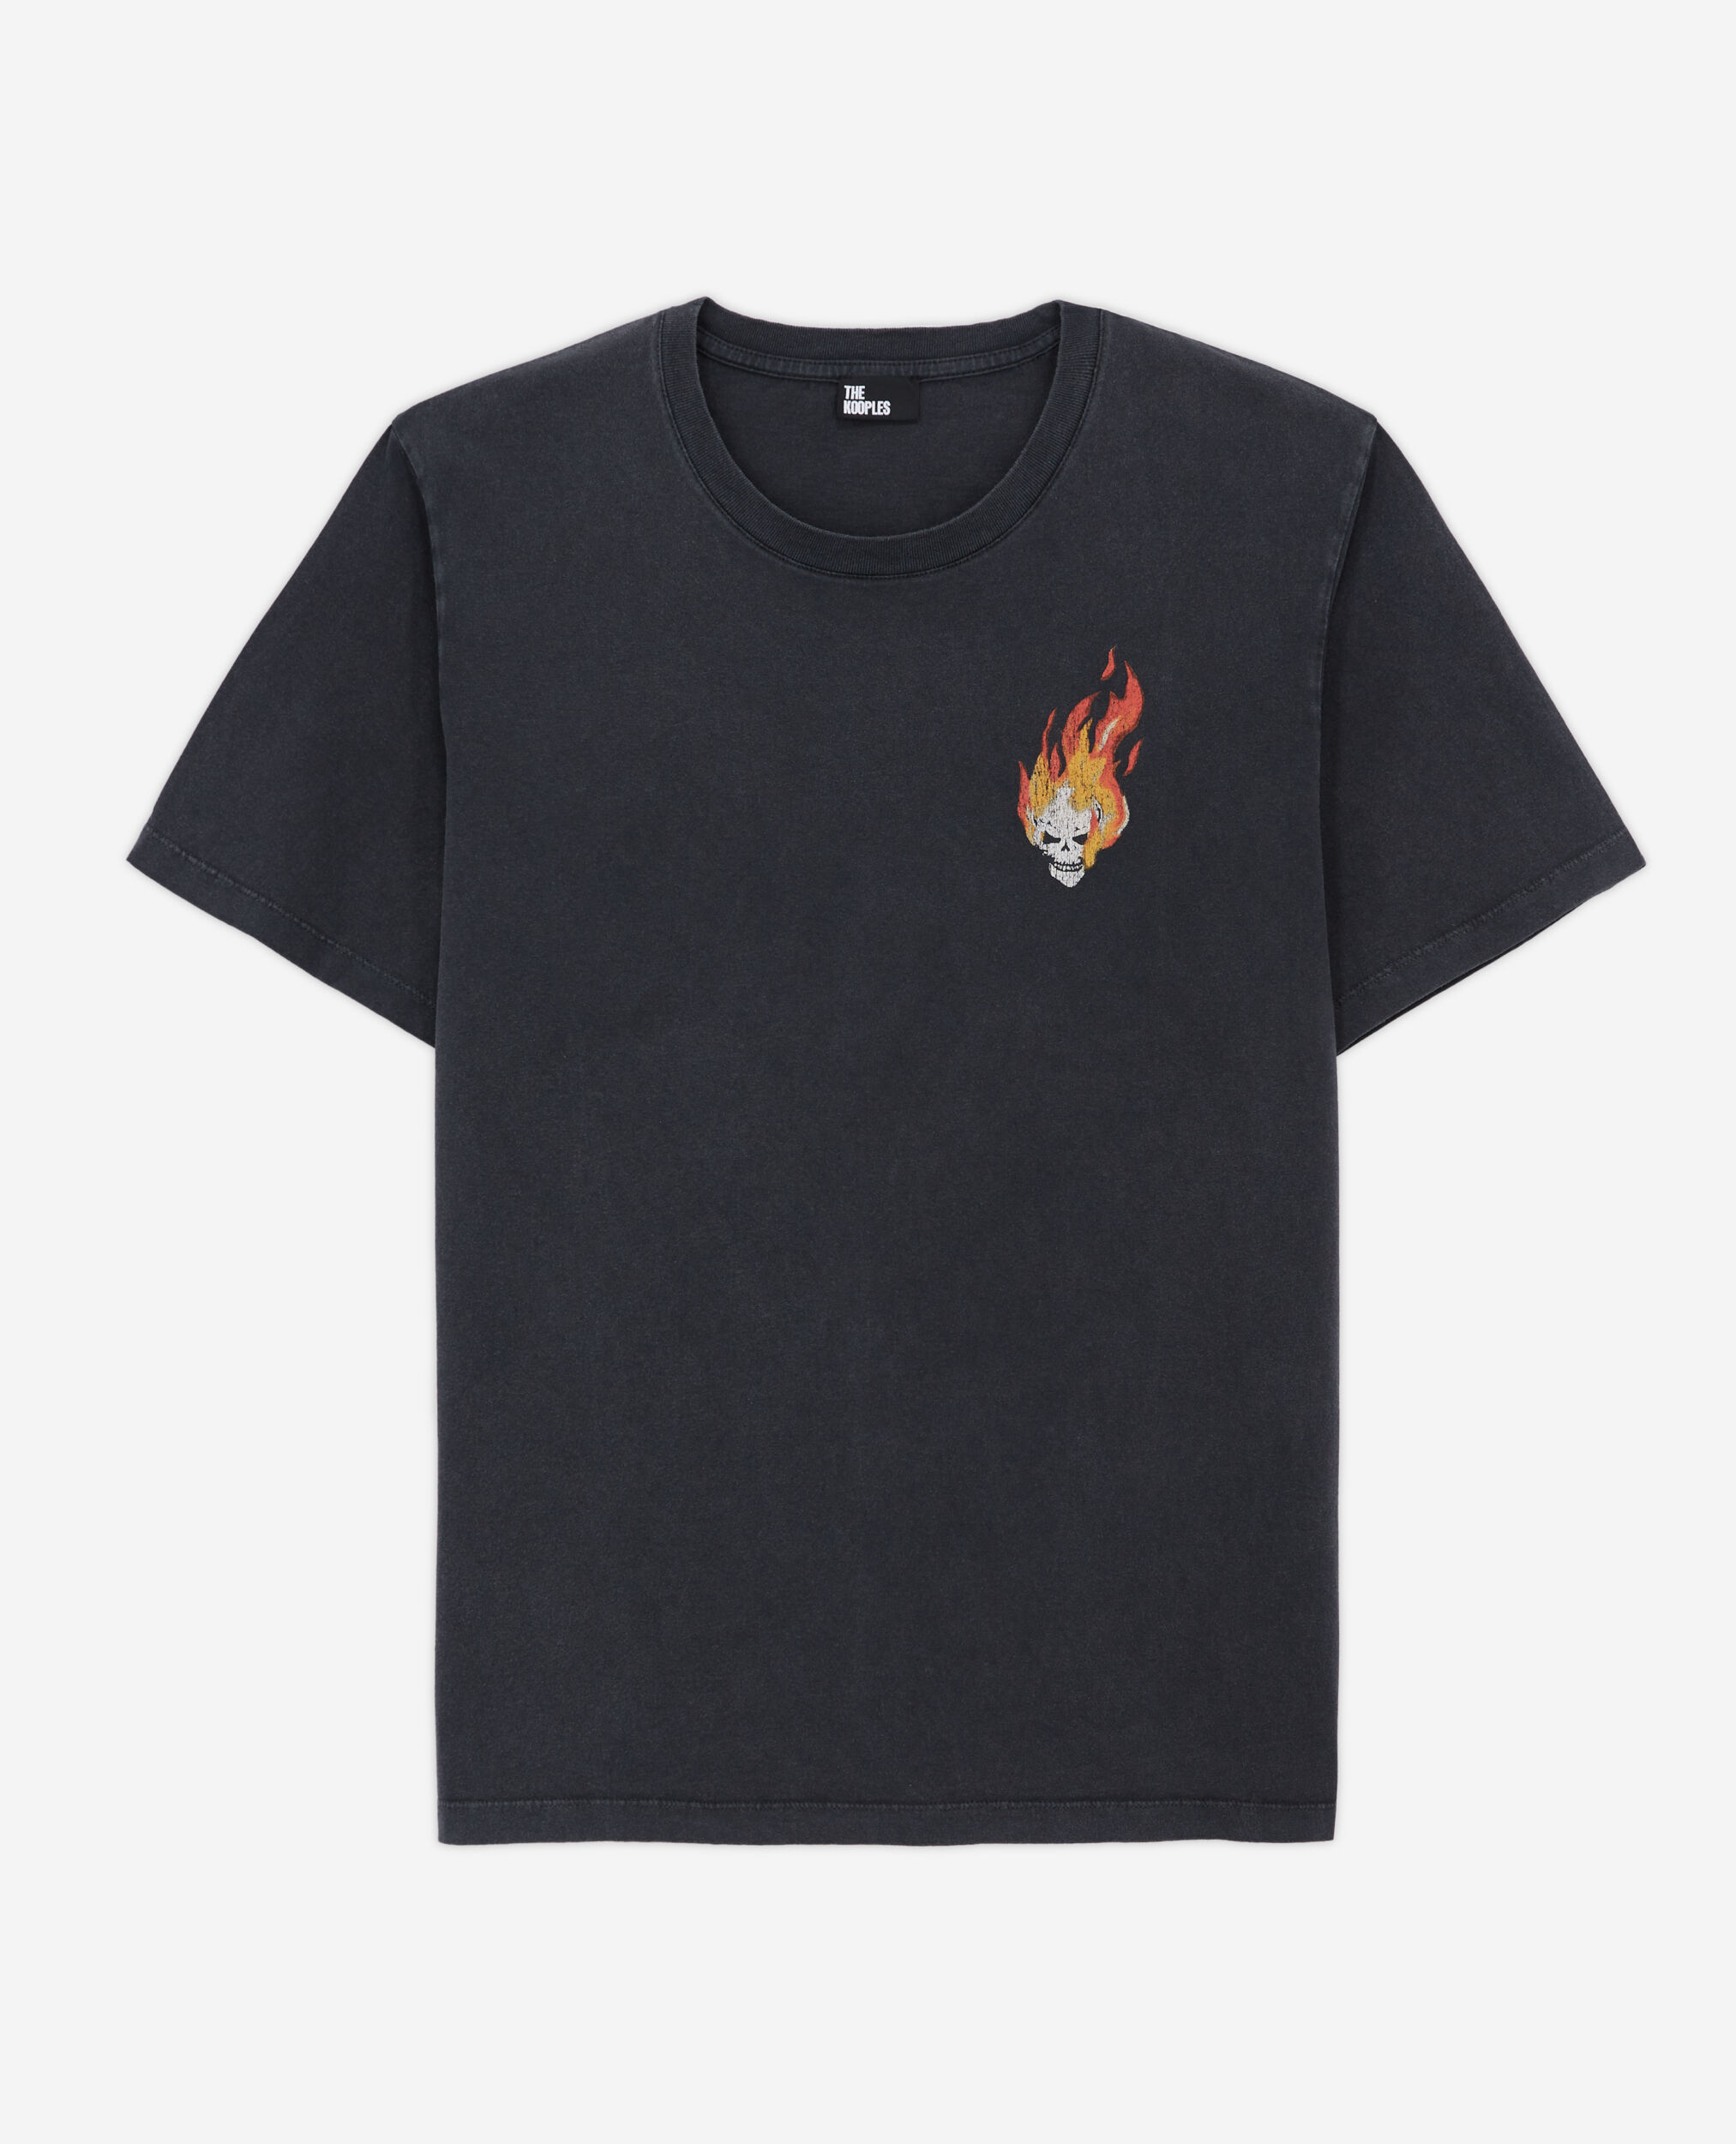 Camiseta negra serigrafiada Skull on fire, BLACK WASHED, hi-res image number null